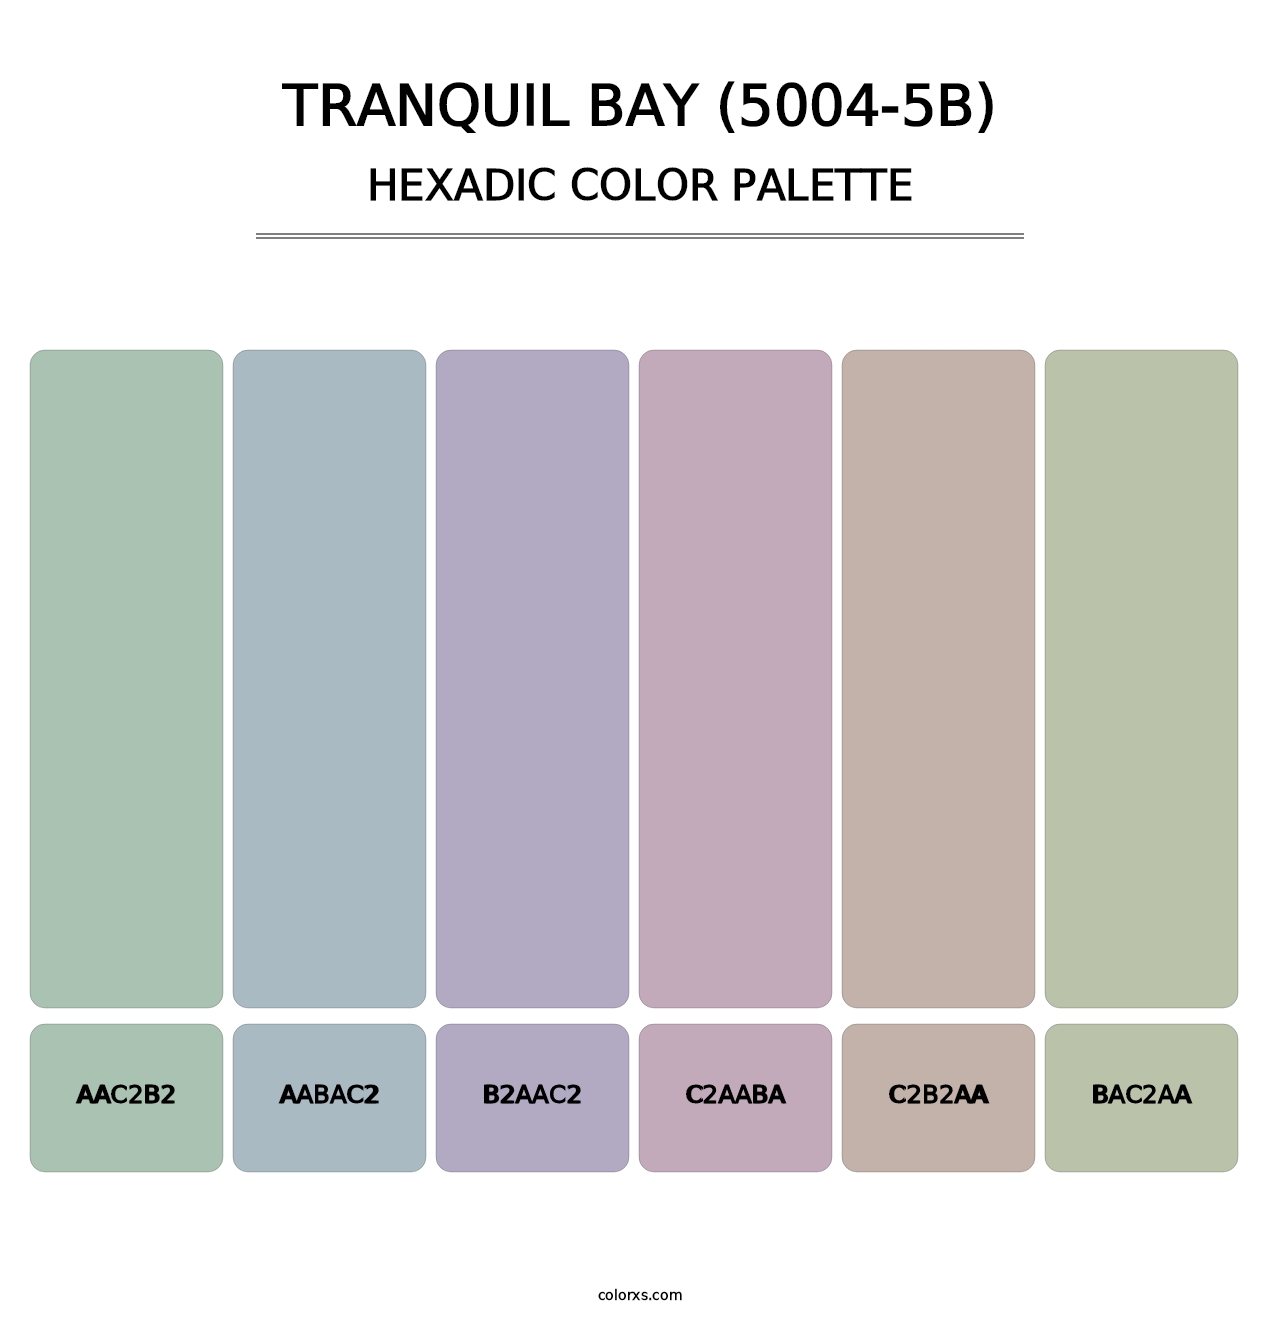 Tranquil Bay (5004-5B) - Hexadic Color Palette